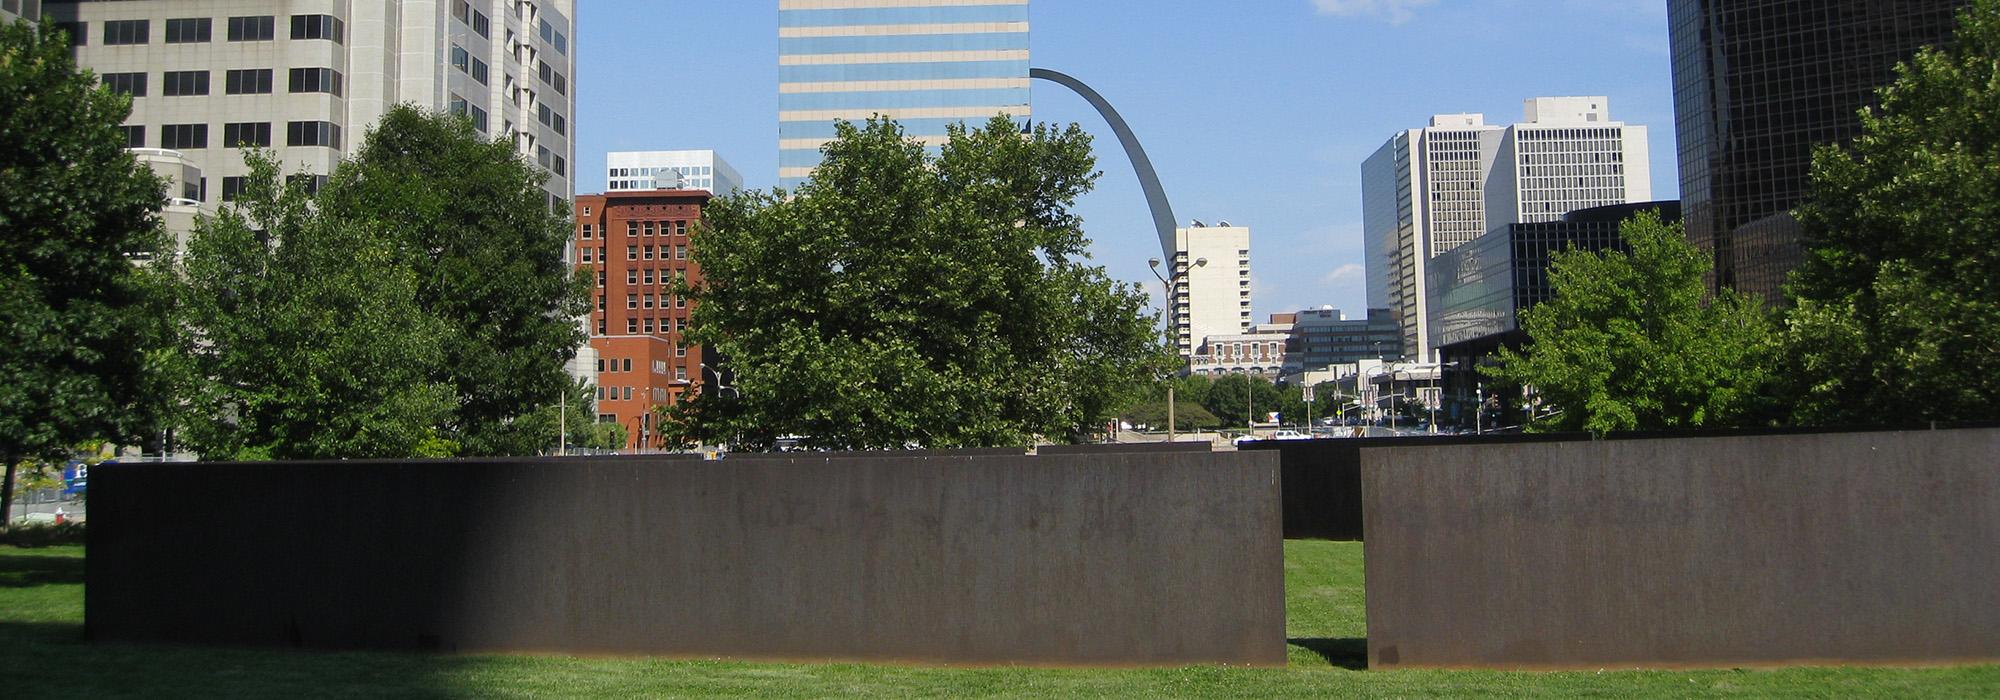 Serra Sculpture Park, St. Louis, MO